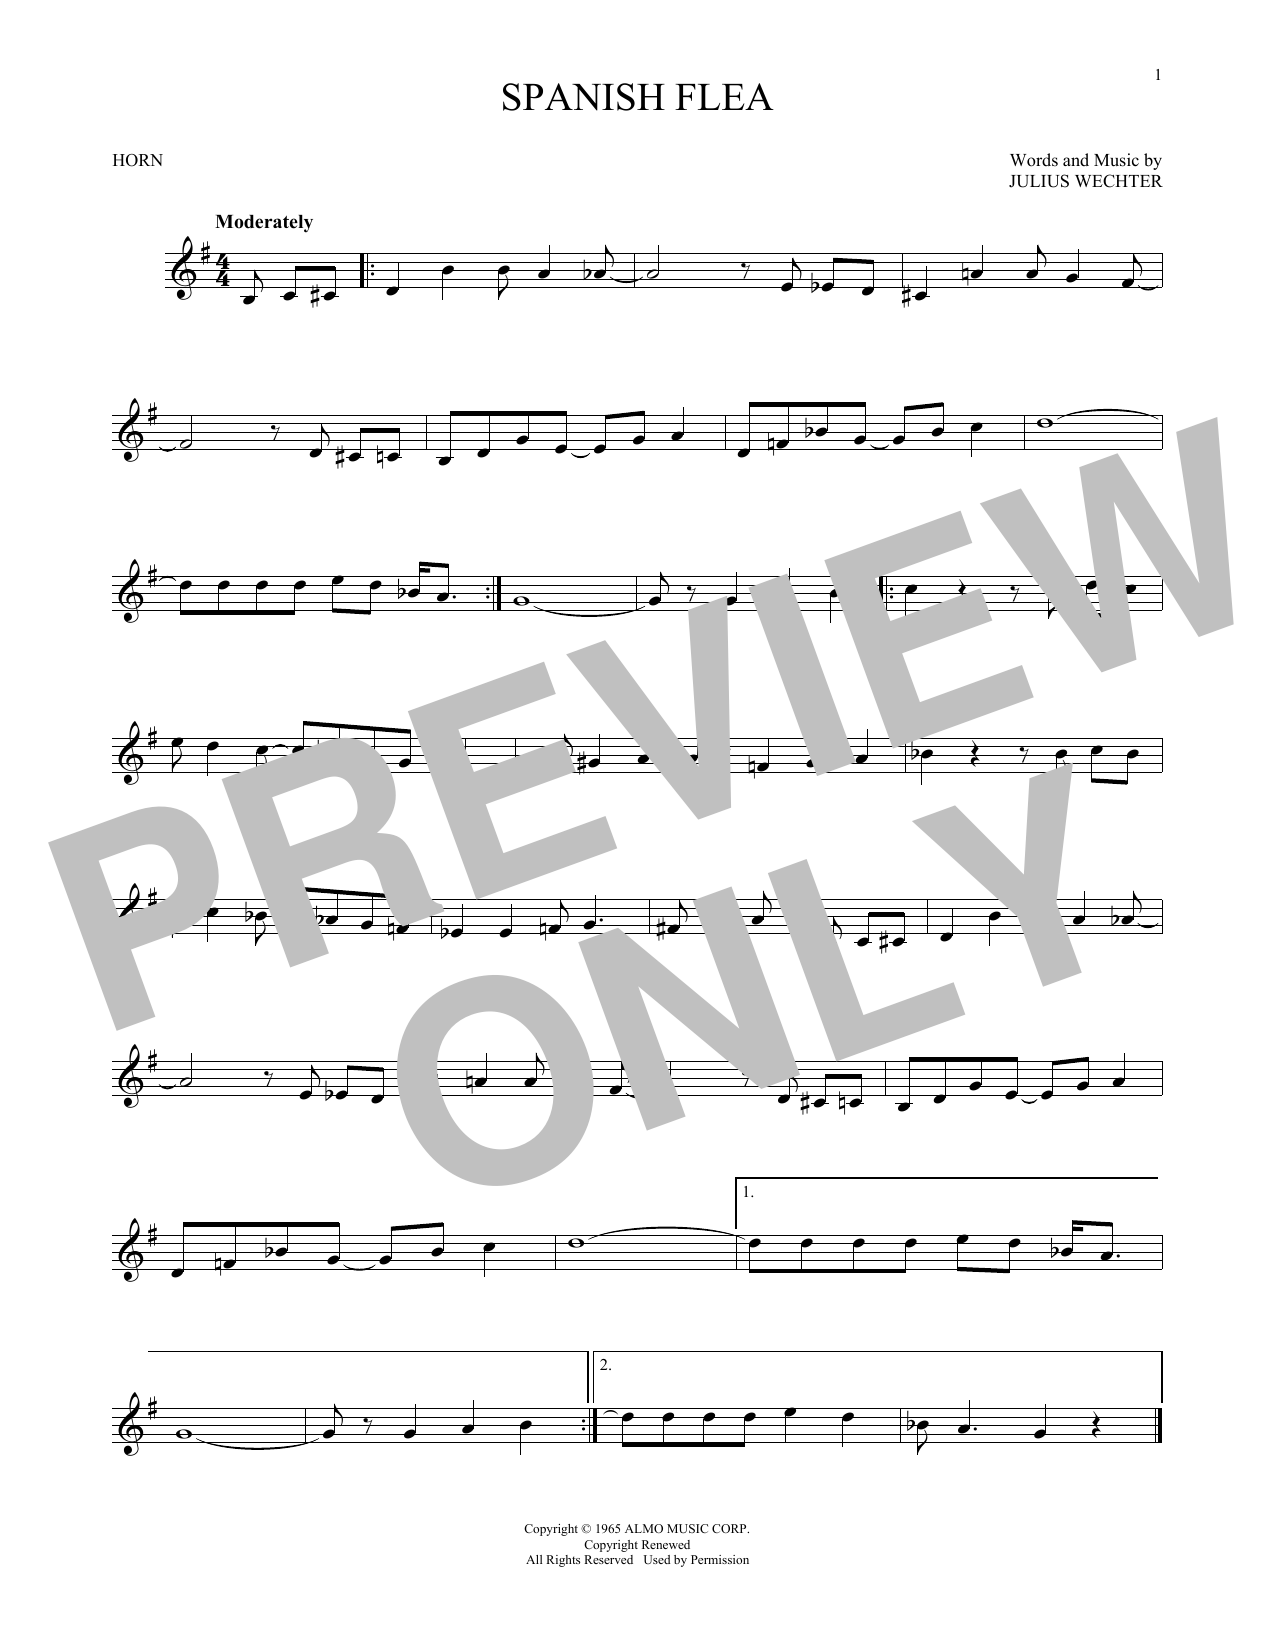 Herb Alpert & The Tijuana Brass Band Spanish Flea Sheet Music Notes & Chords for Trombone - Download or Print PDF